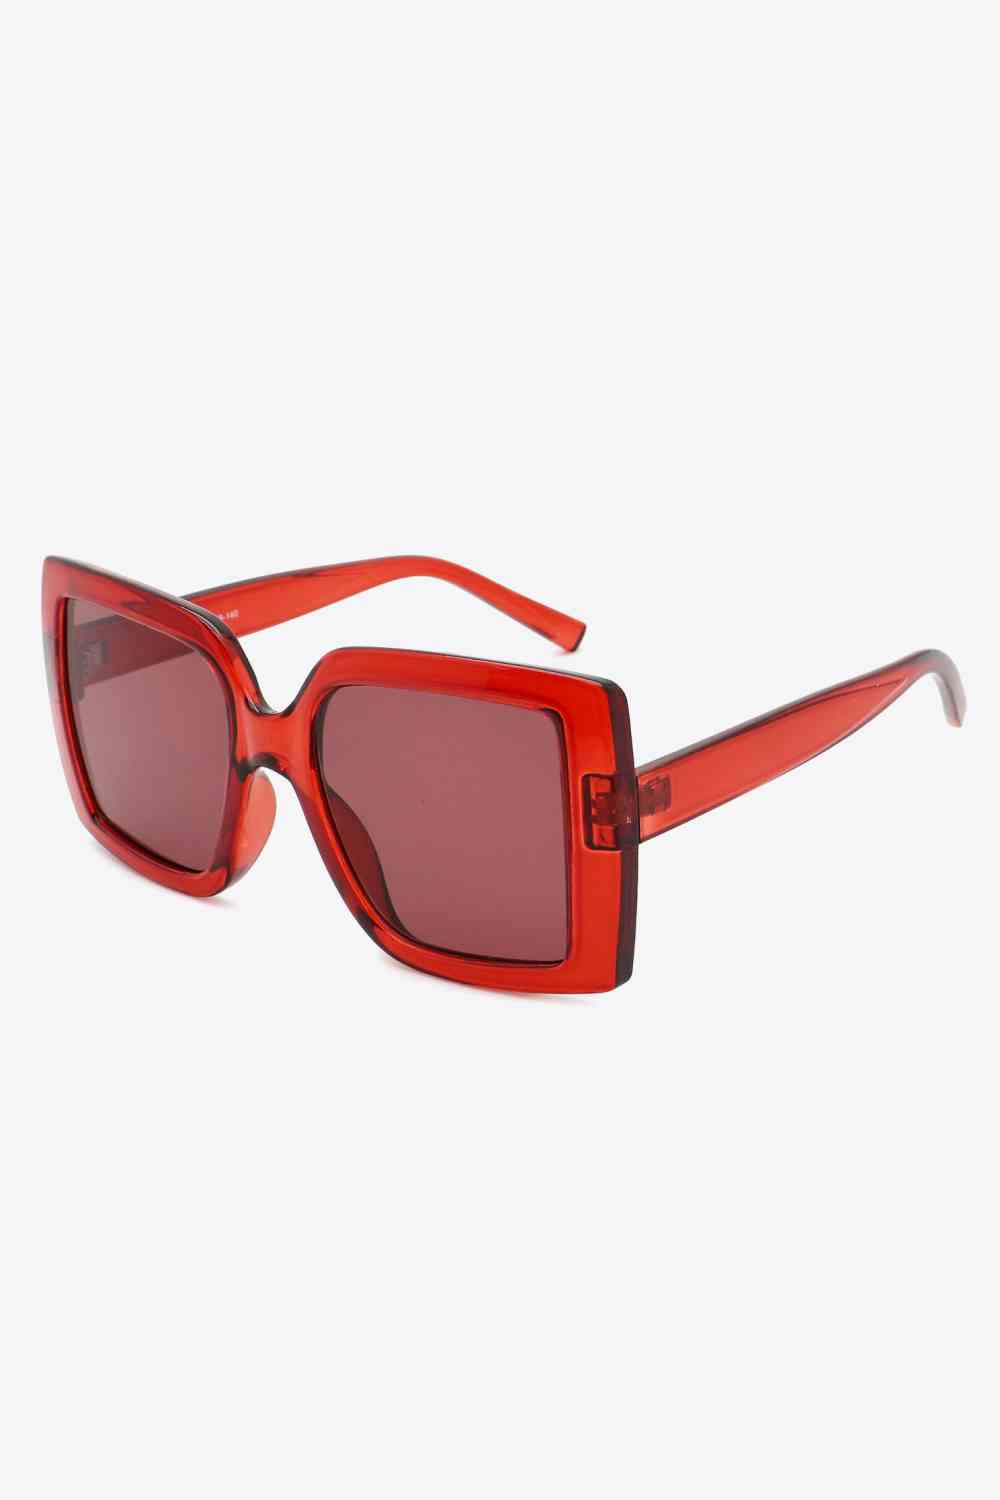 TEEK - Deep Red Square Sunglasses EYEGLASSES TEEK Trend   